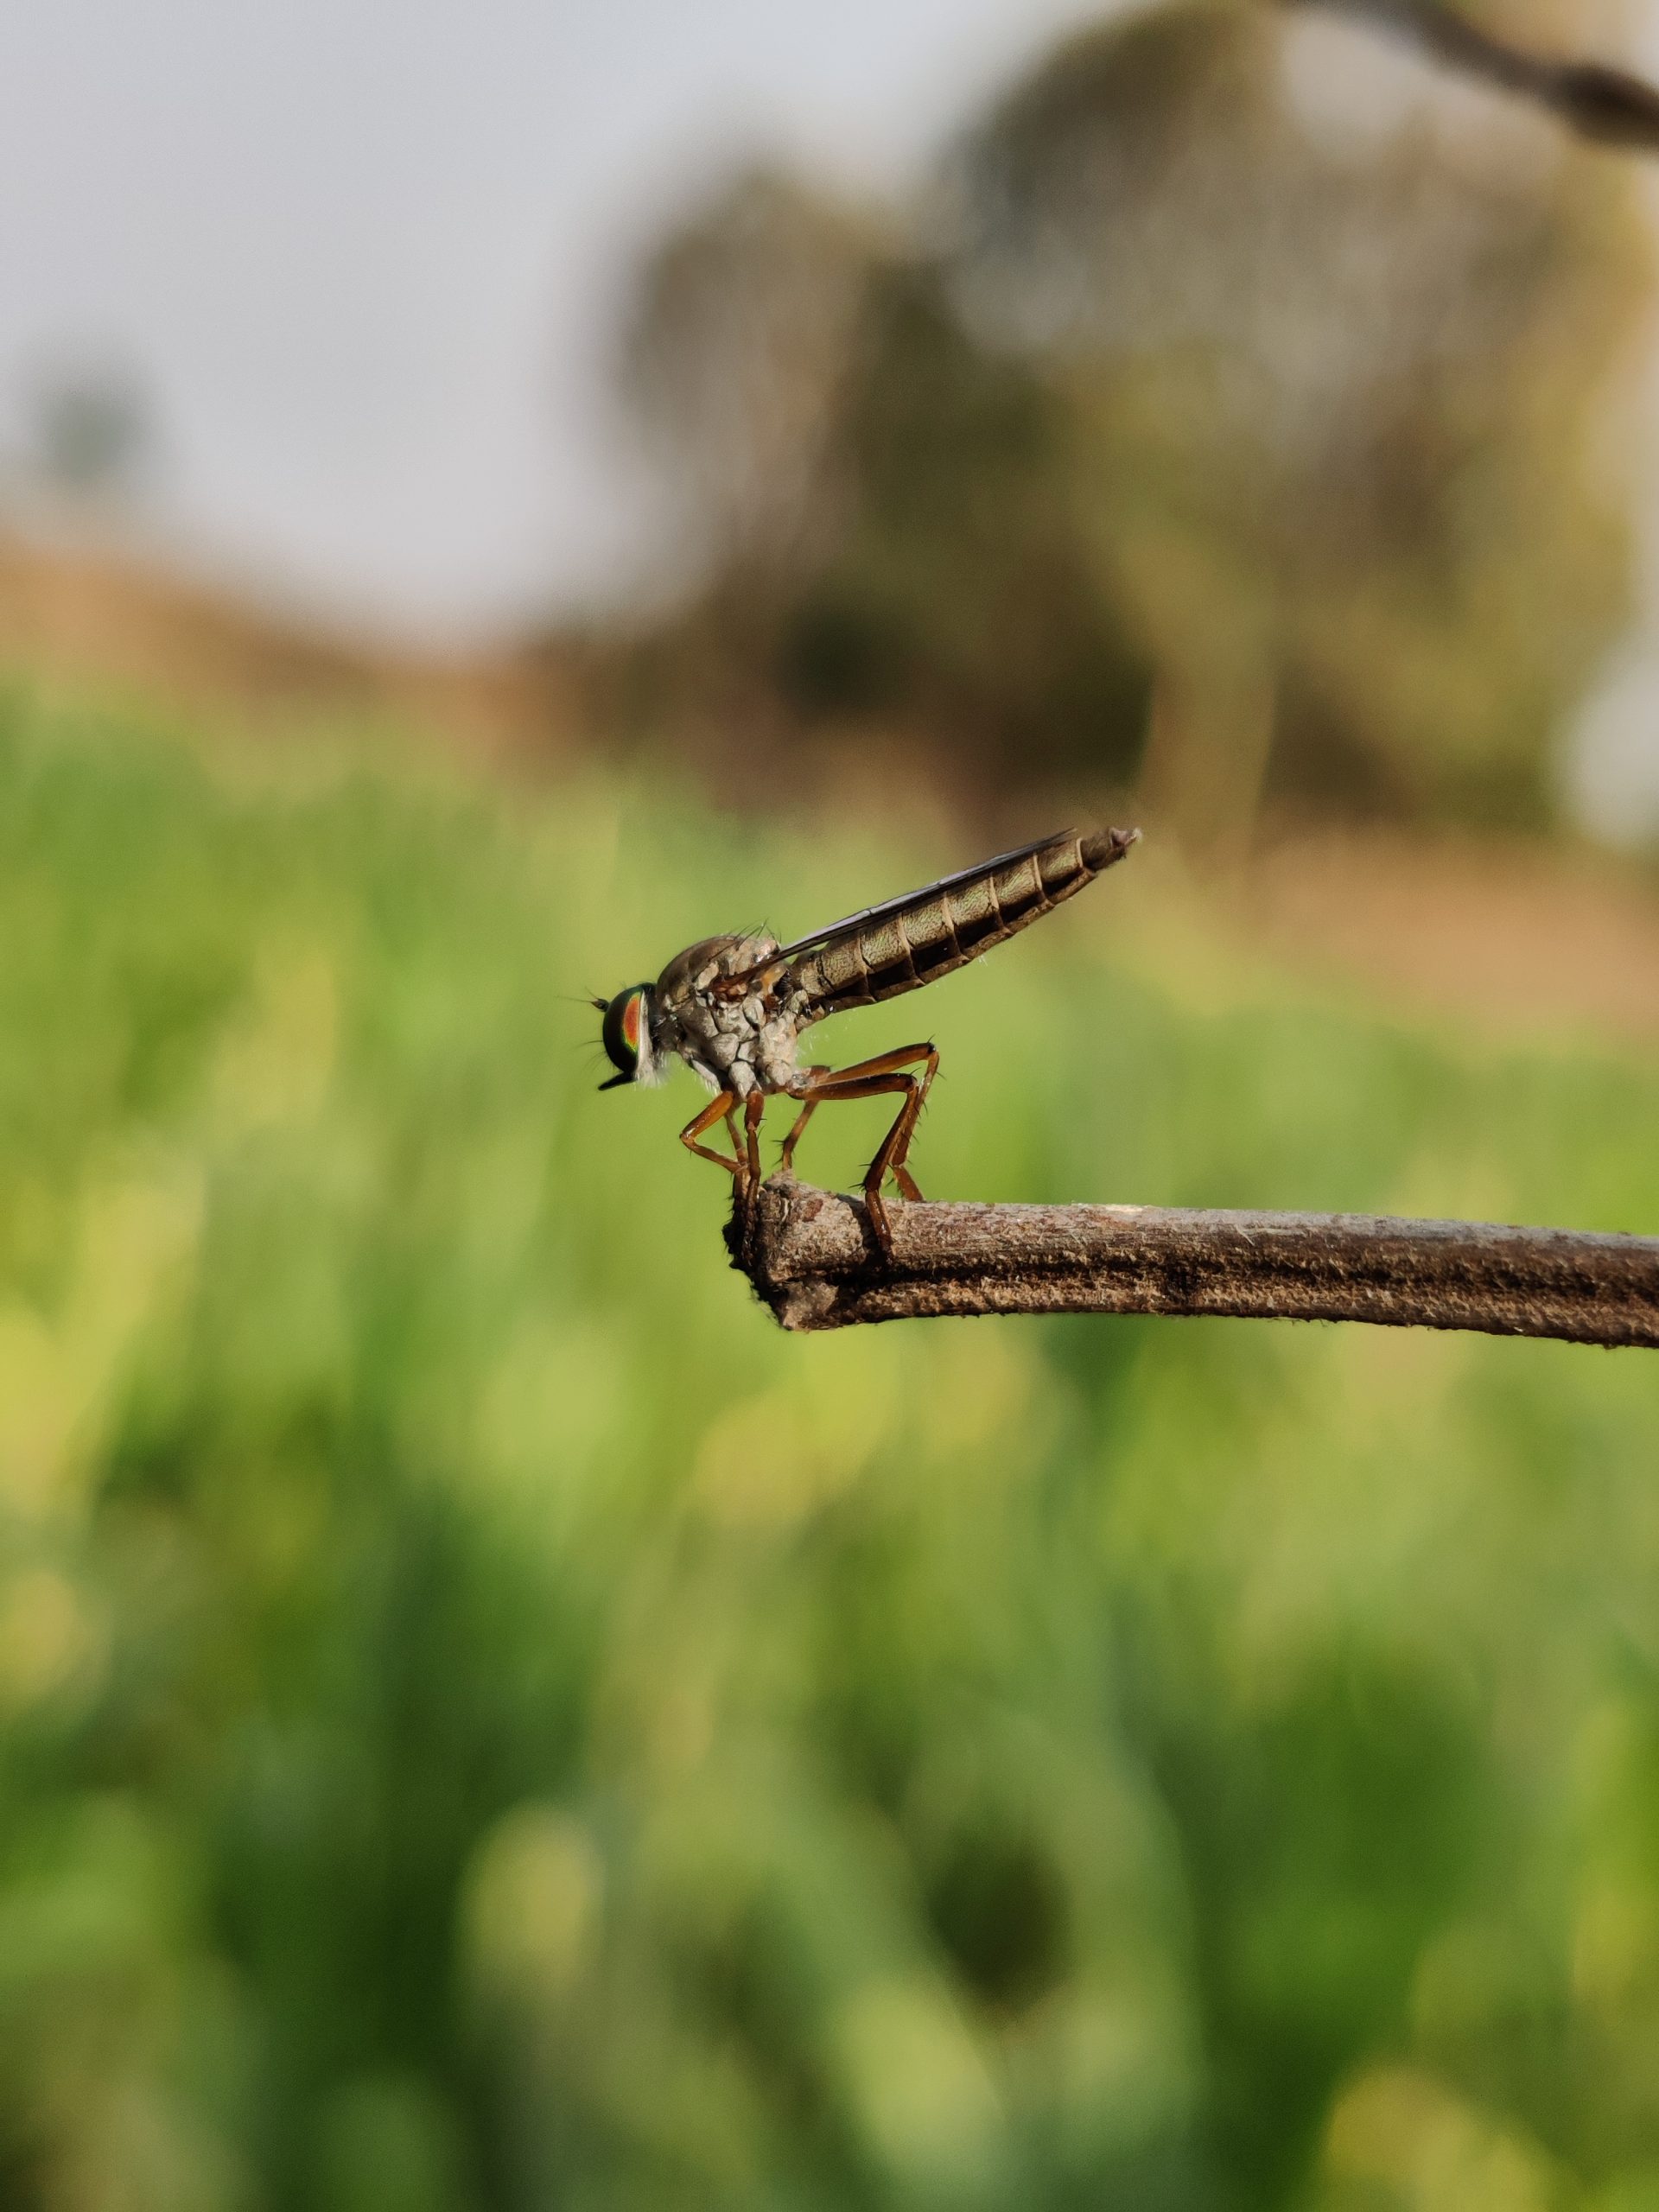 An dragonfly on a twig